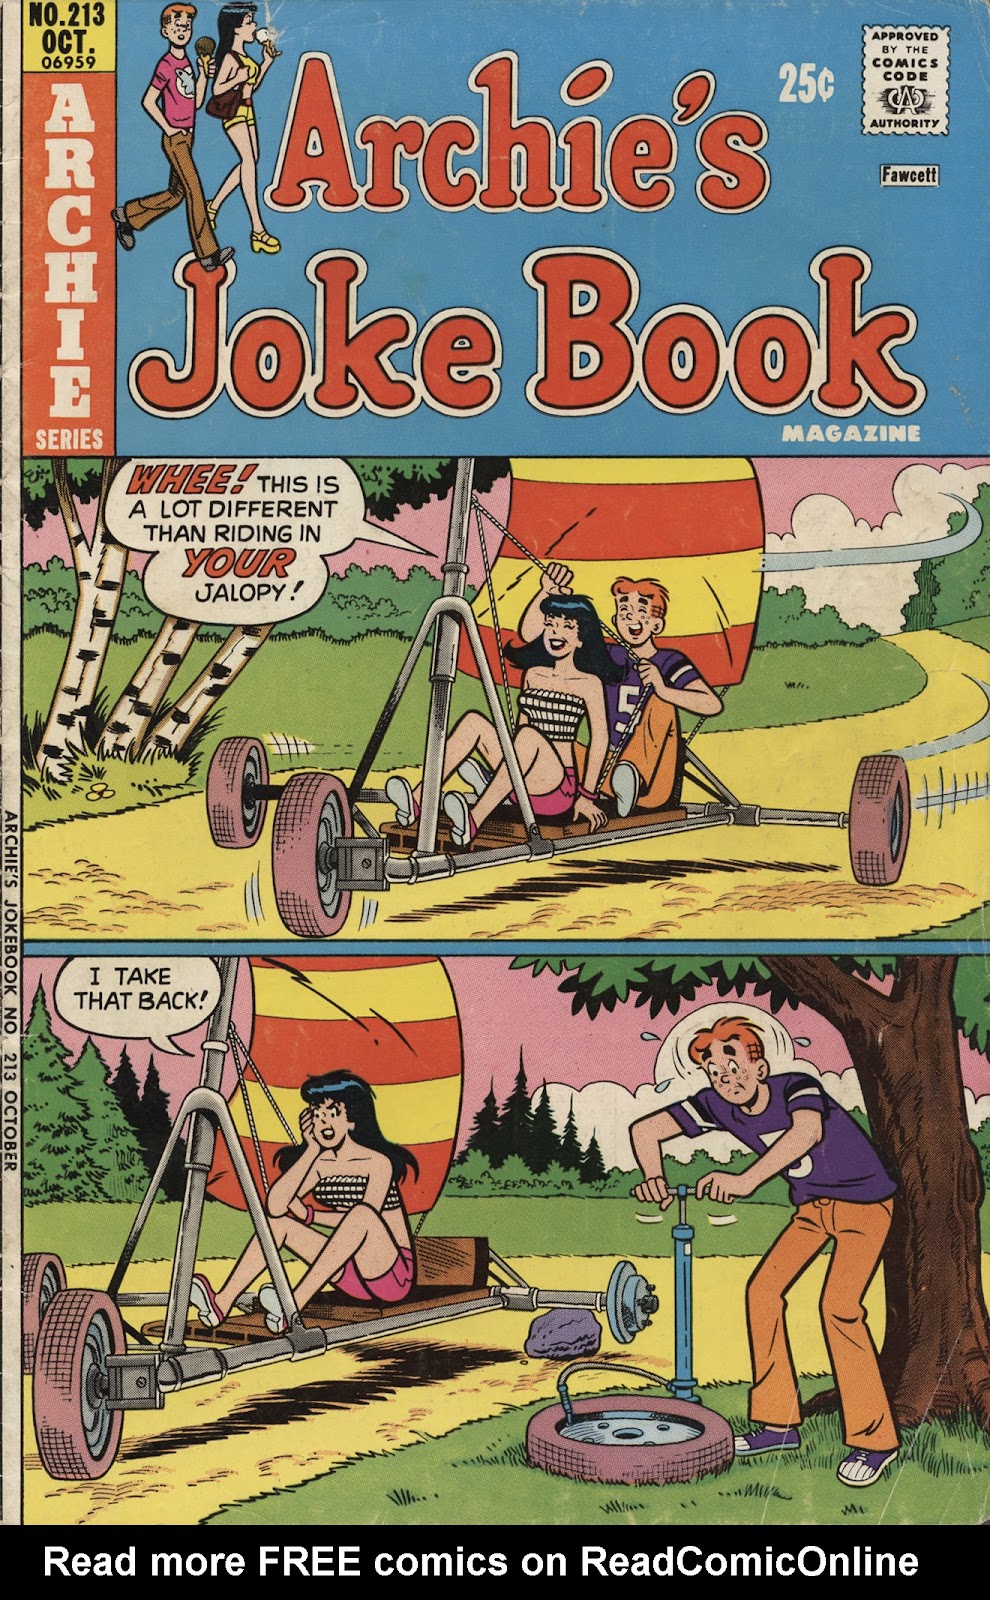 Archie's Joke Book Magazine issue 213 - Page 1